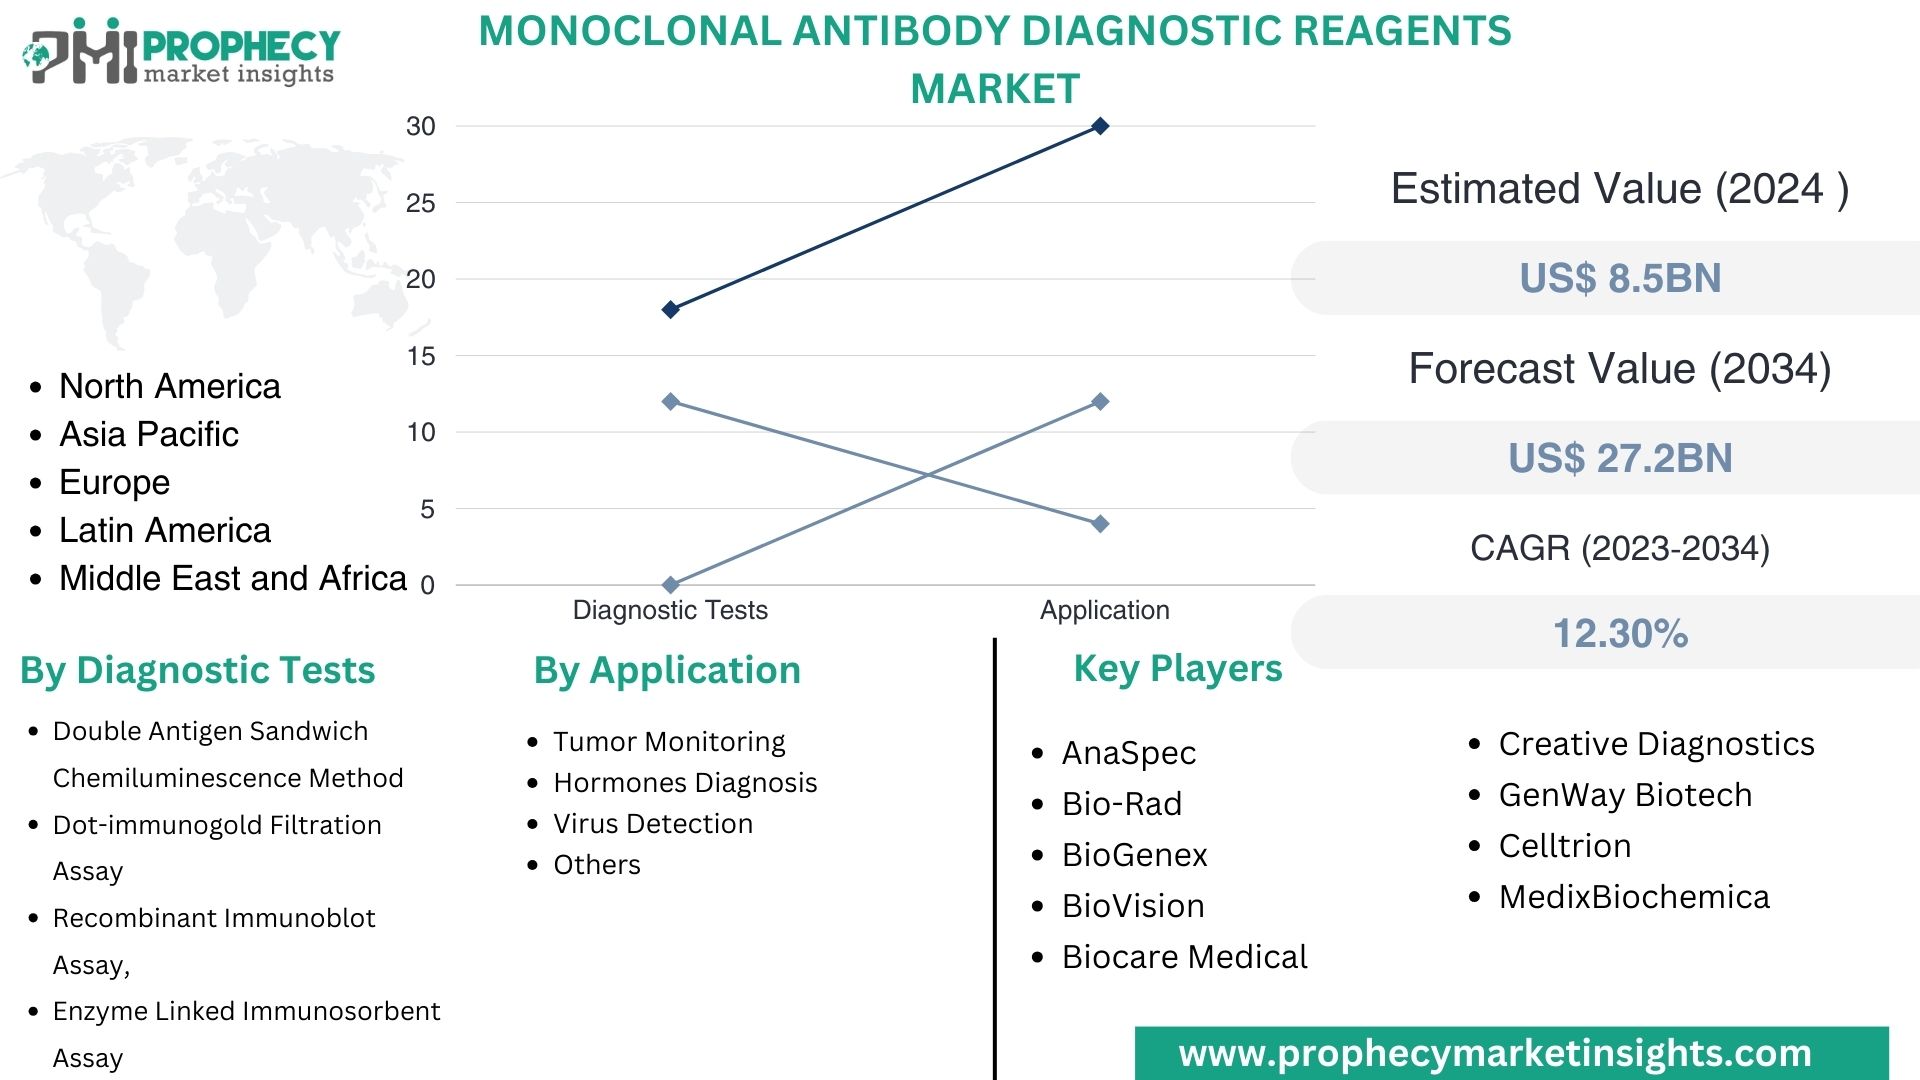 Monoclonal Antibody Diagnostic Reagents Market